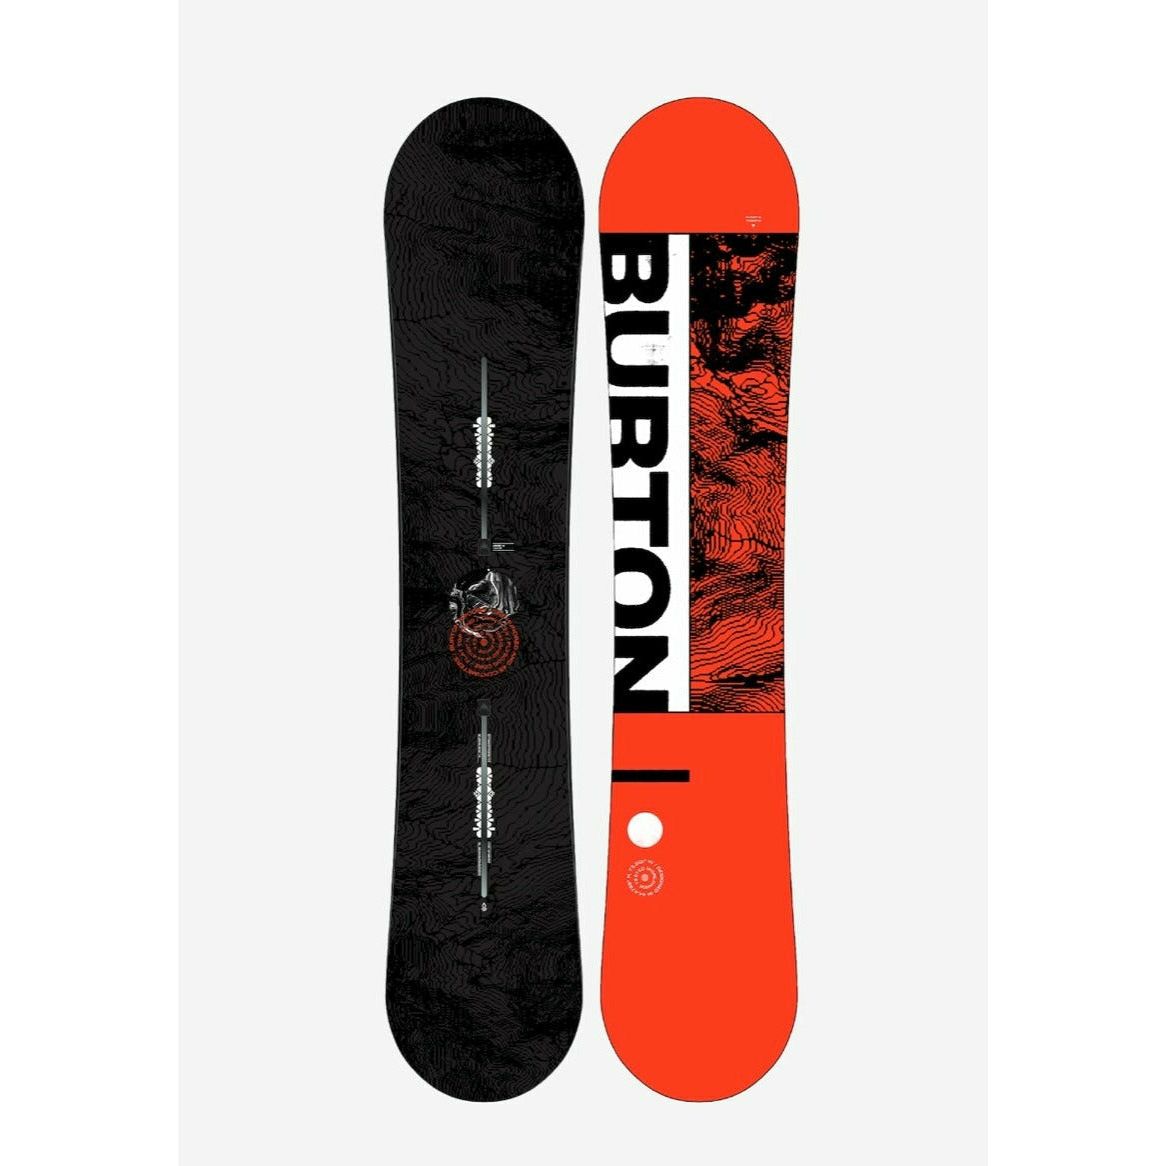 BURTON Ripcord snowboard